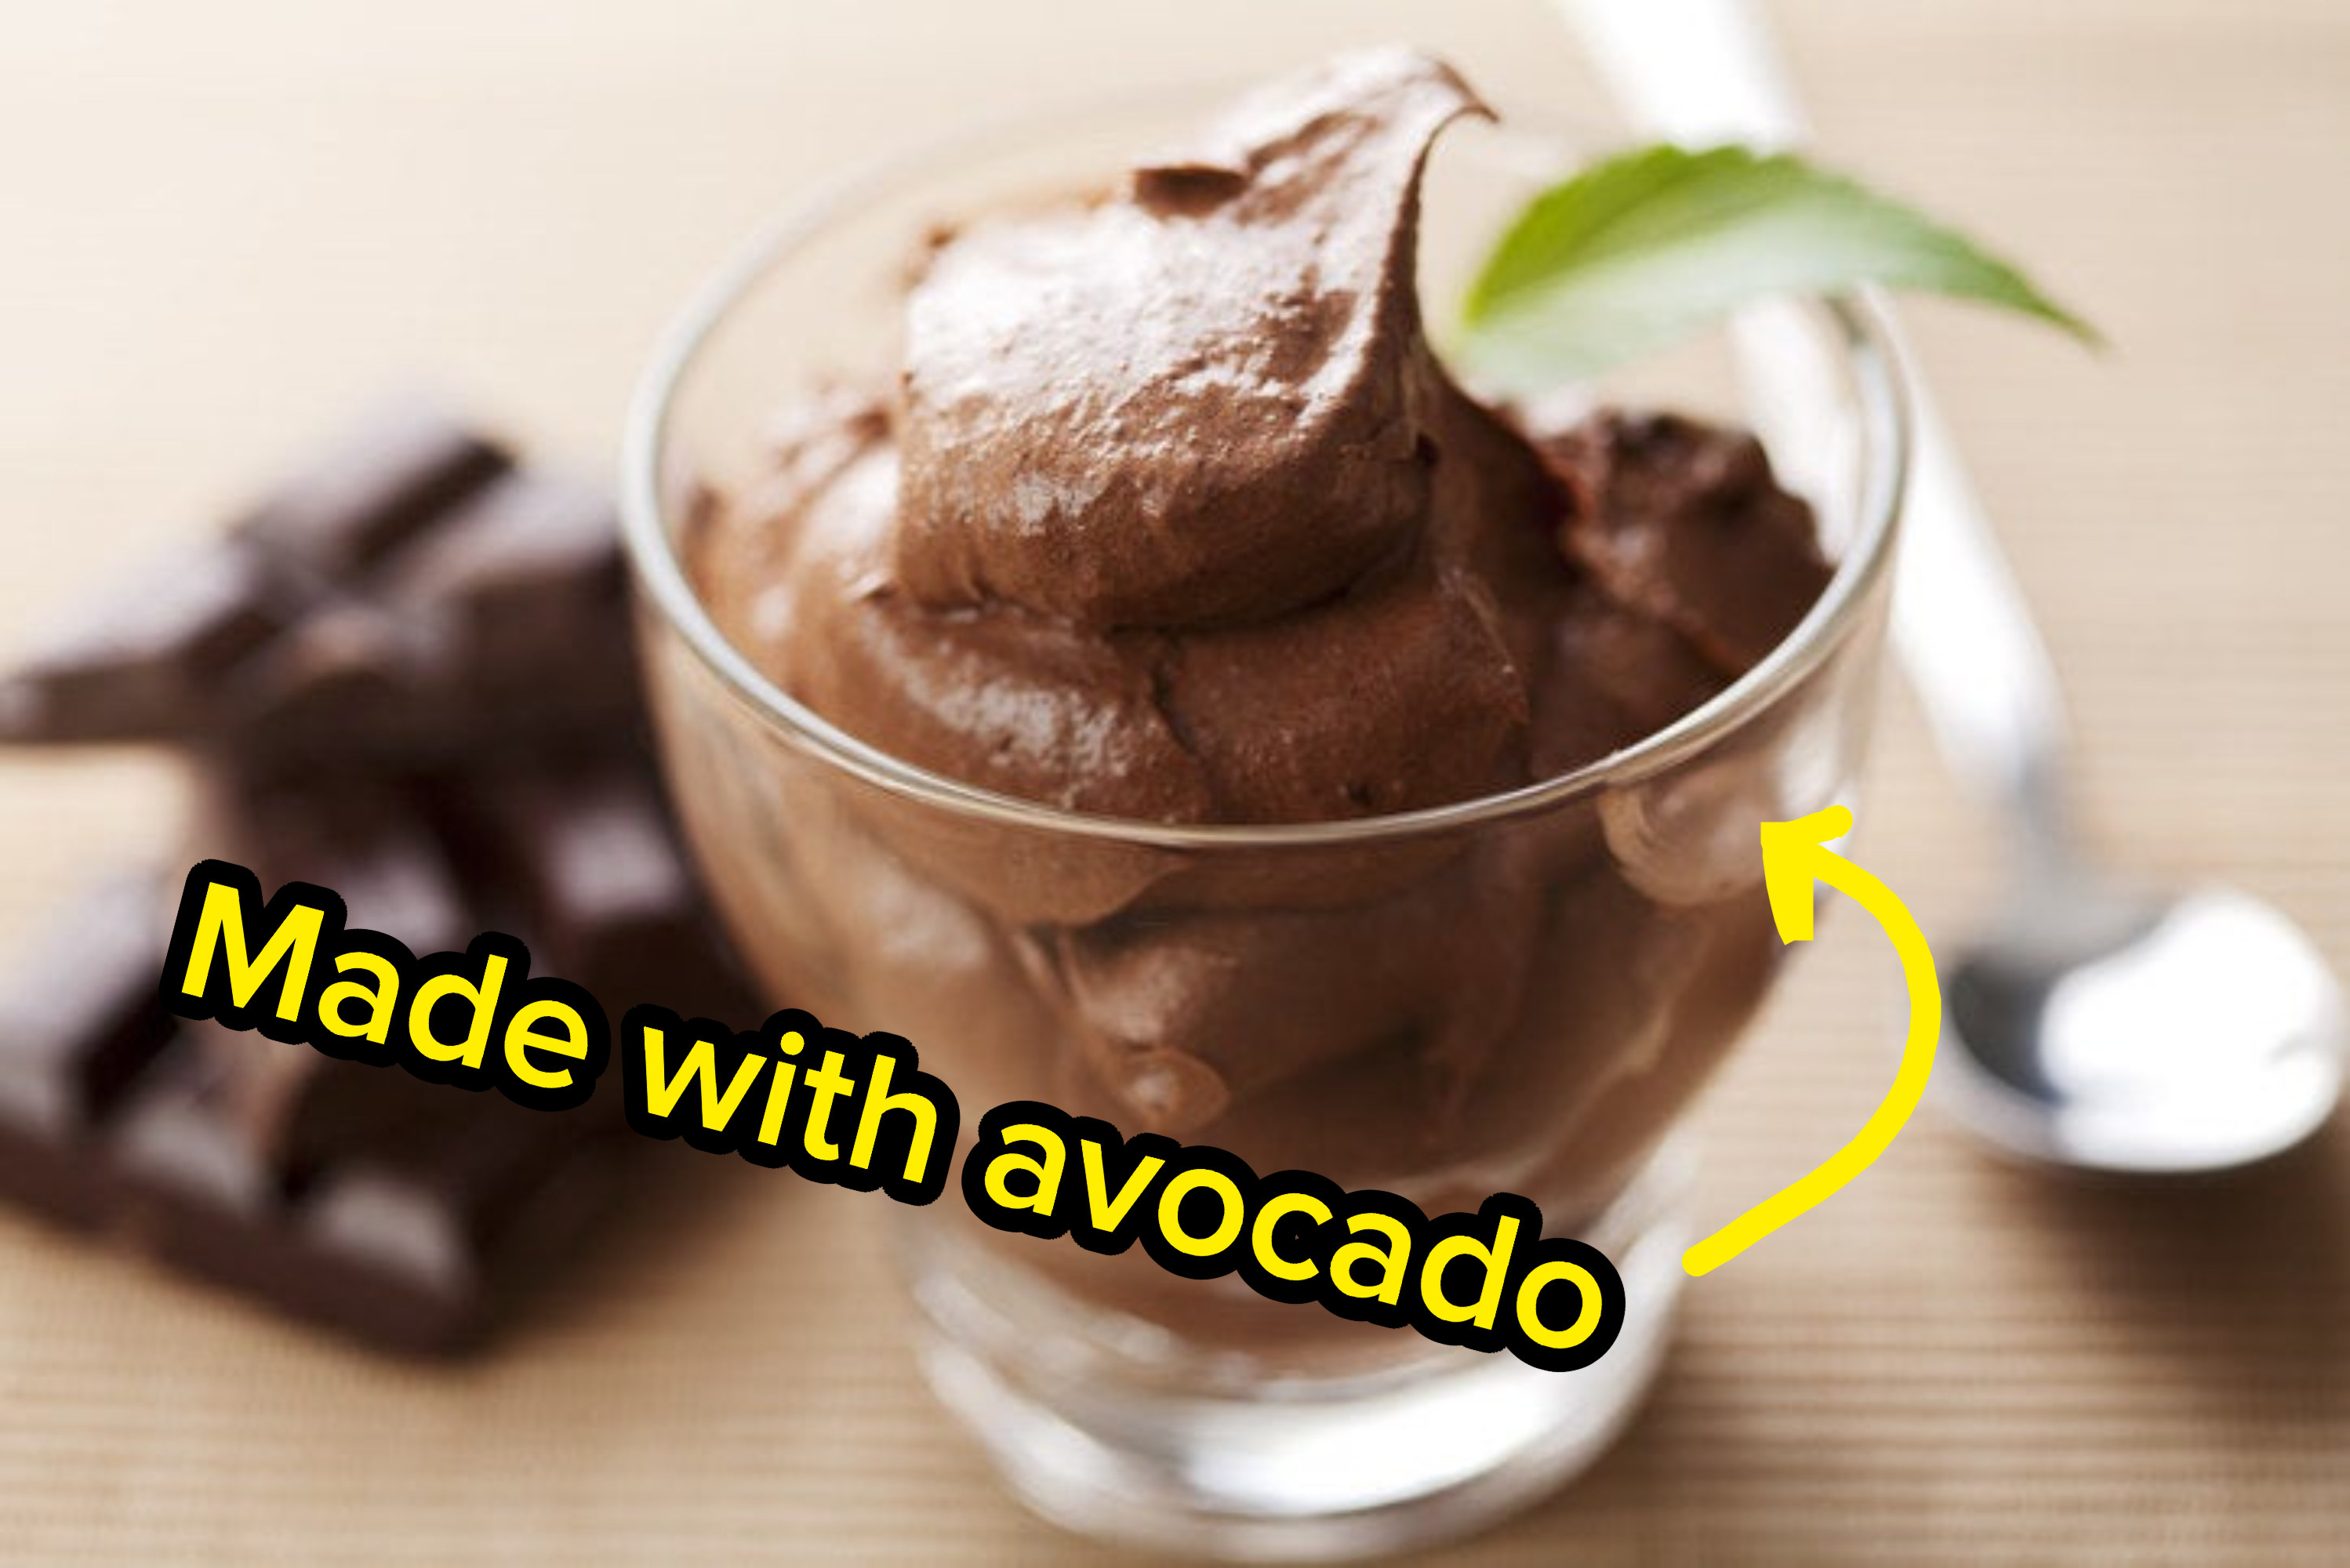 Chocolate ice cream made with avocado